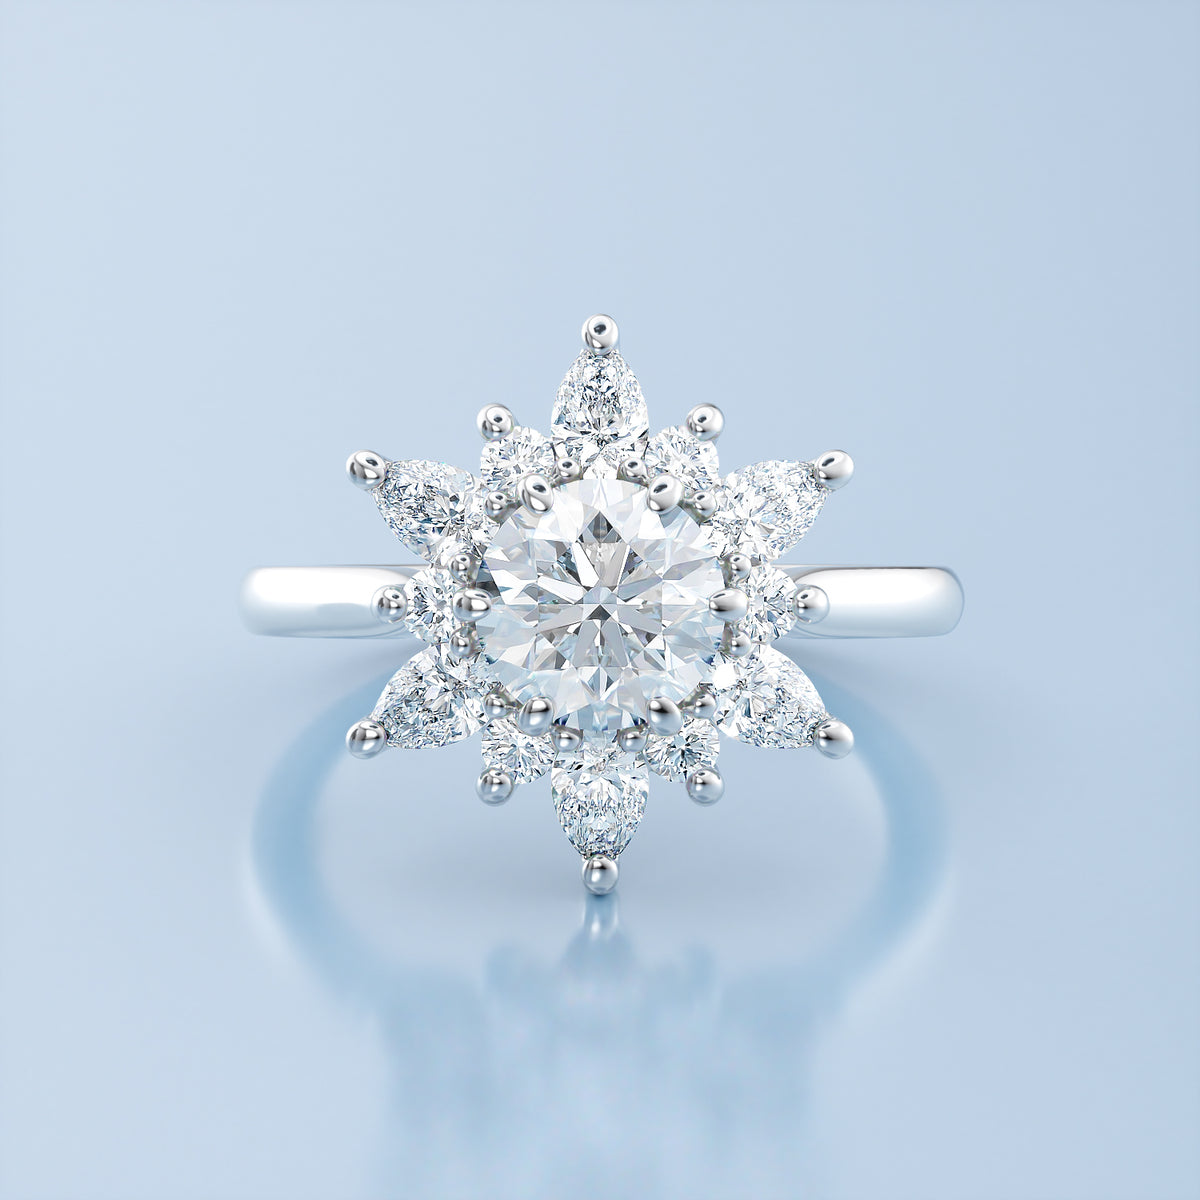 Mixed Cut Snowflake Engagement Ring - Snowflake North Star All Moissanite